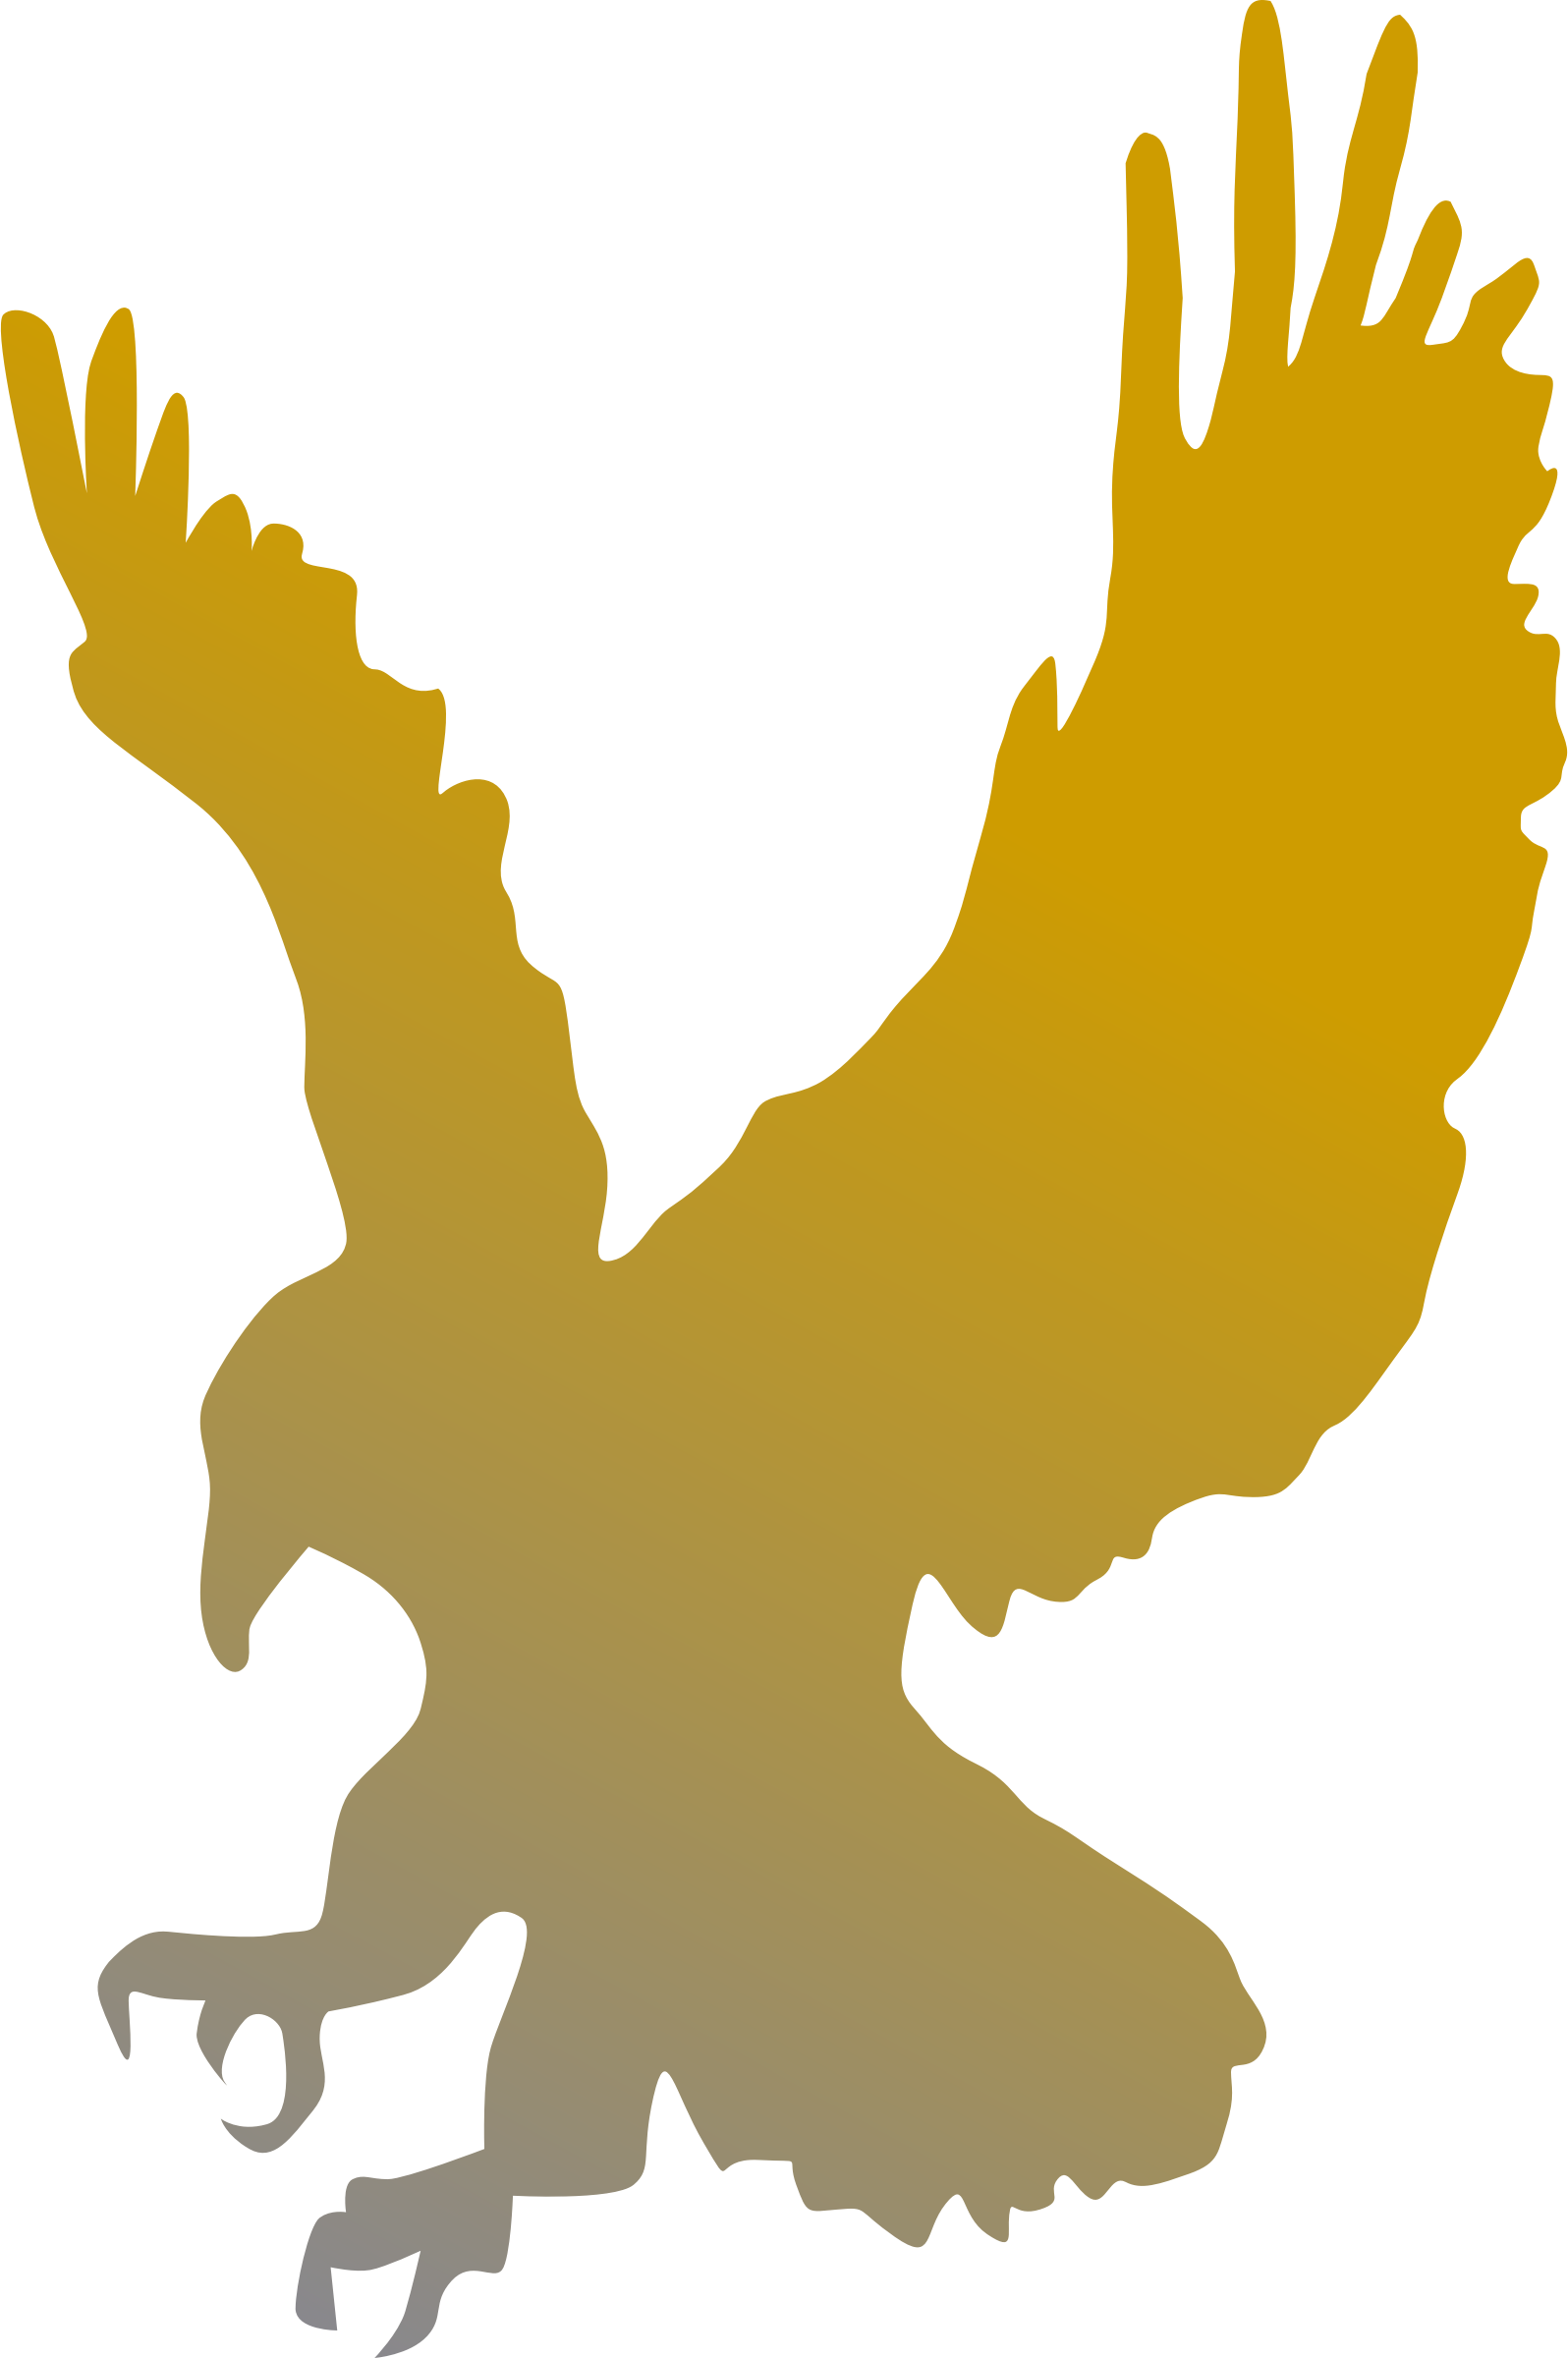 Golden eagle spread wing. Eagles clipart agila